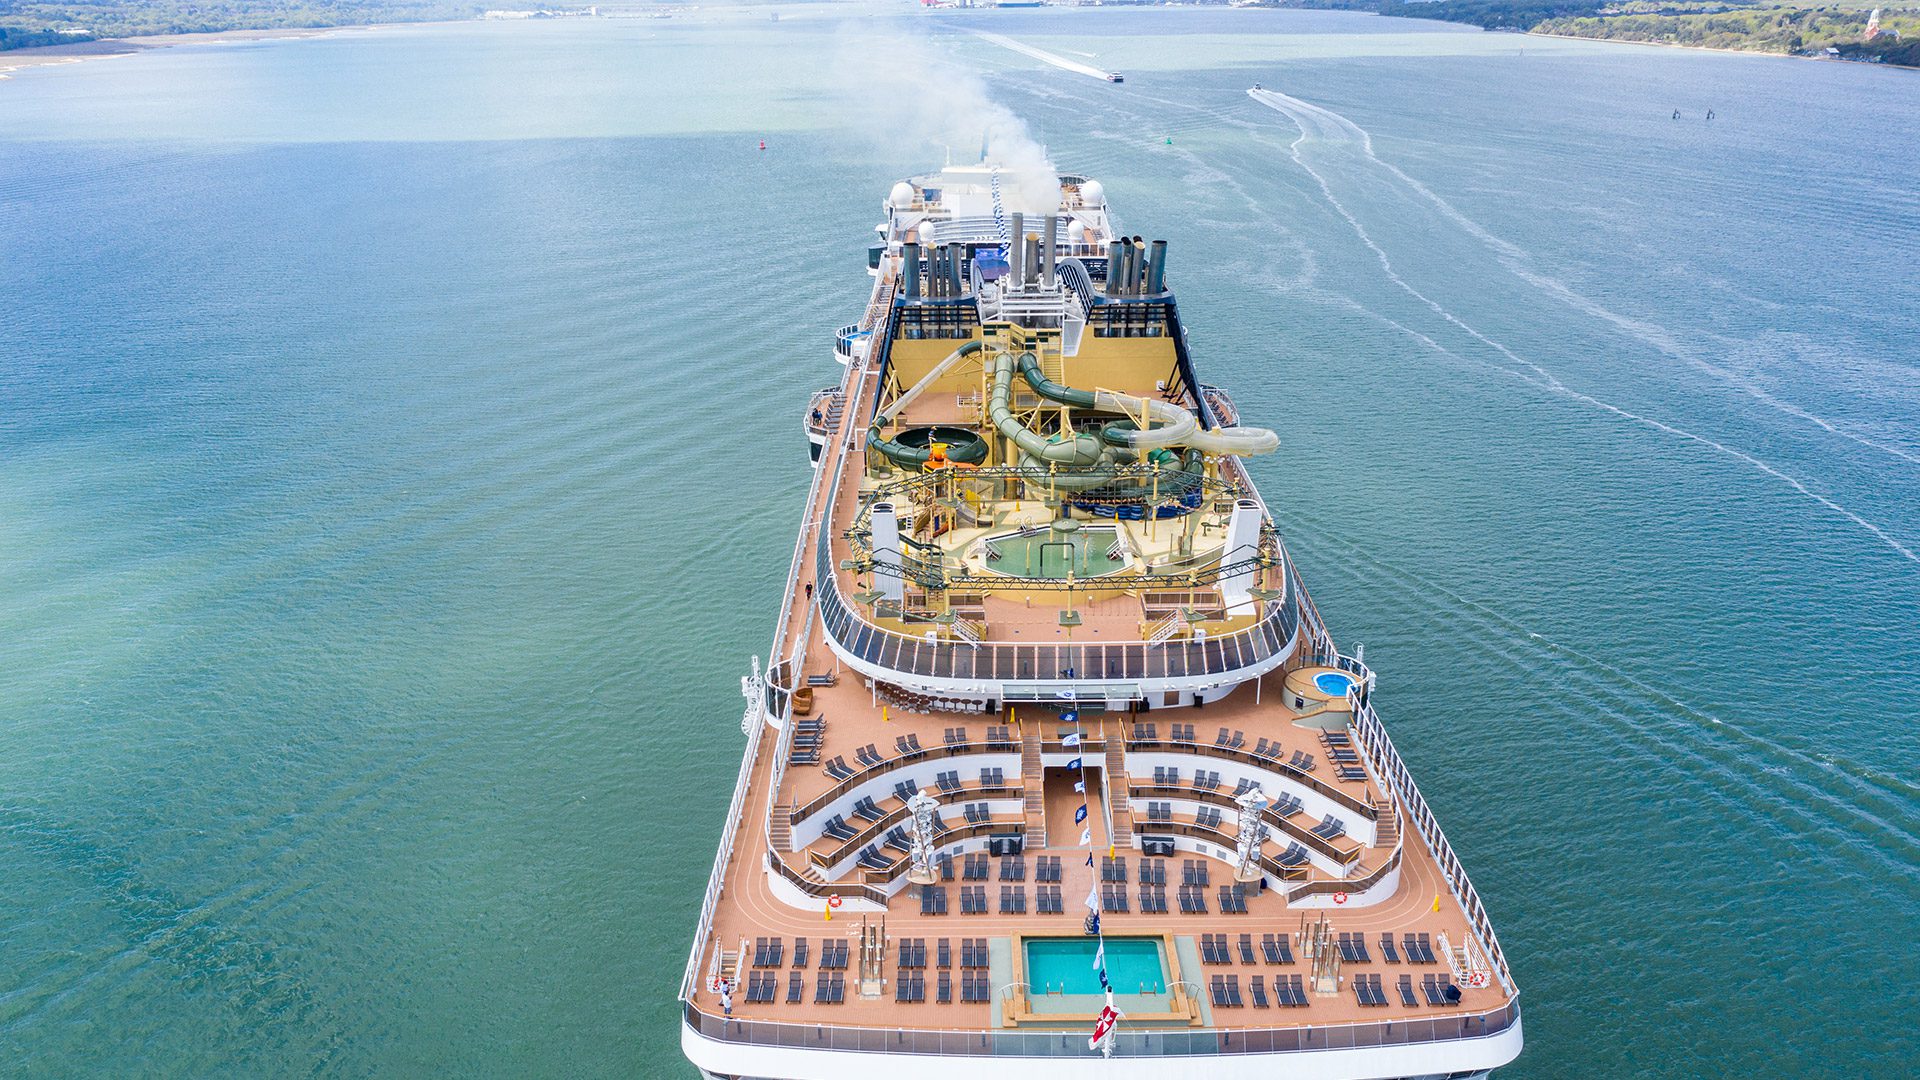 MSC Virtuosa cruise ship arriving empty at Southampton port, image by Wayleebird